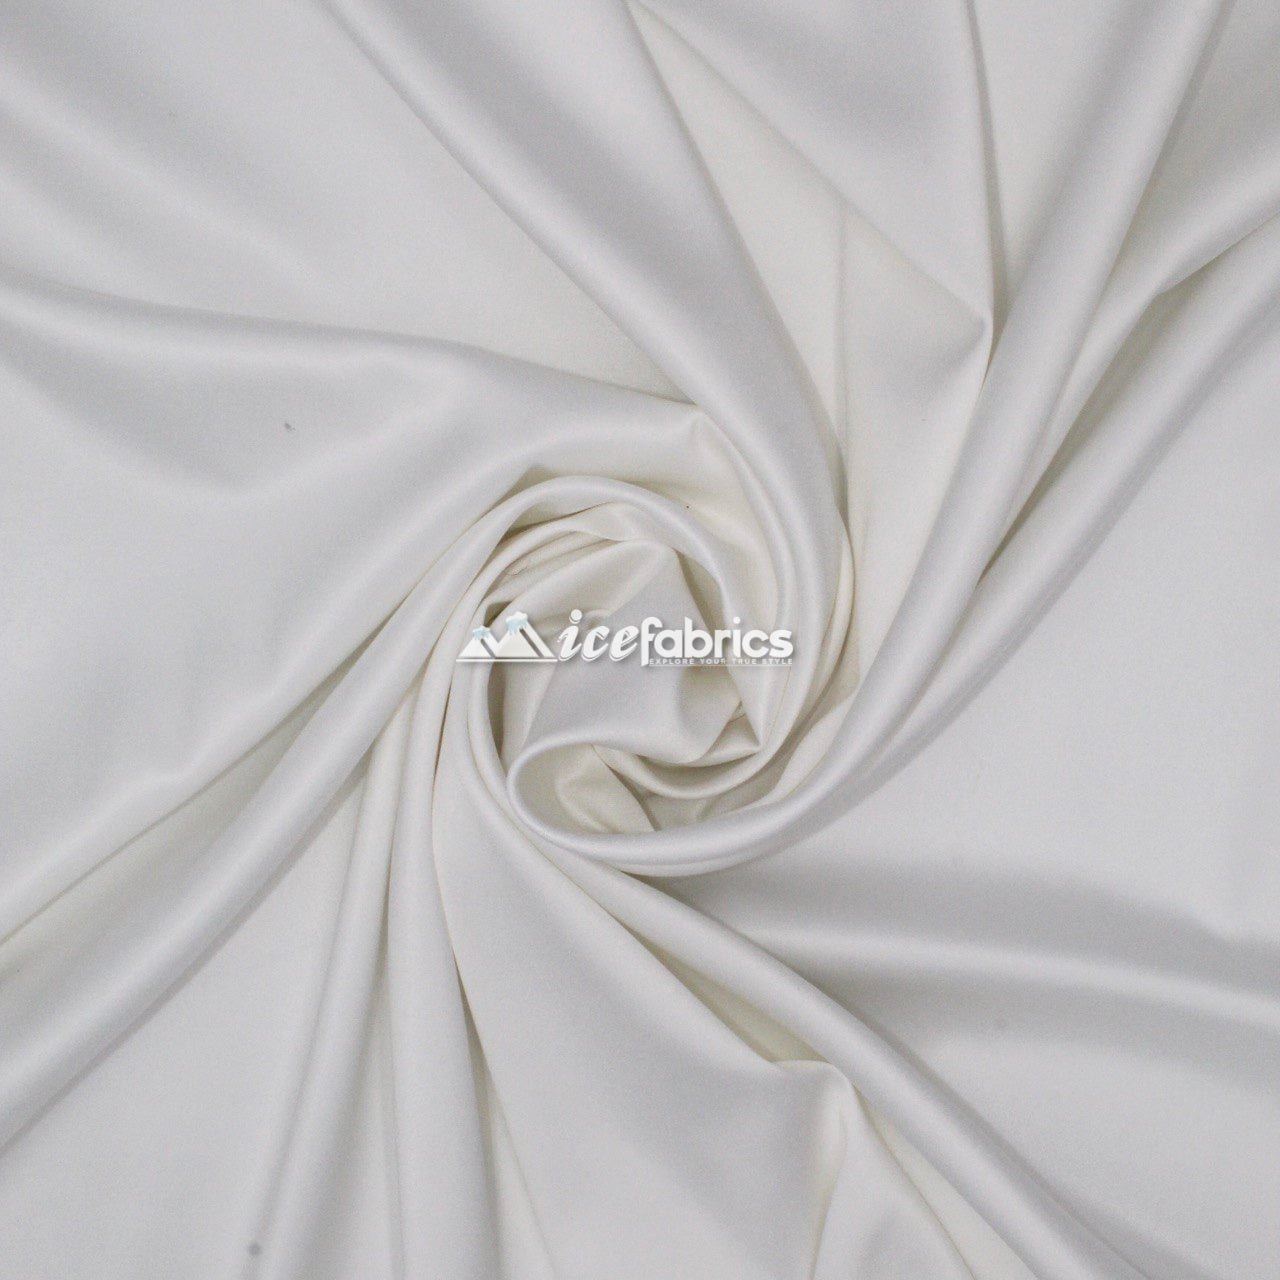 White Bridal Fabric Armani Silky Heavy SatinICE FABRICSICE FABRICSWhiteBy The YardWhite Bridal Fabric Armani Silky Heavy Satin ICE FABRICS